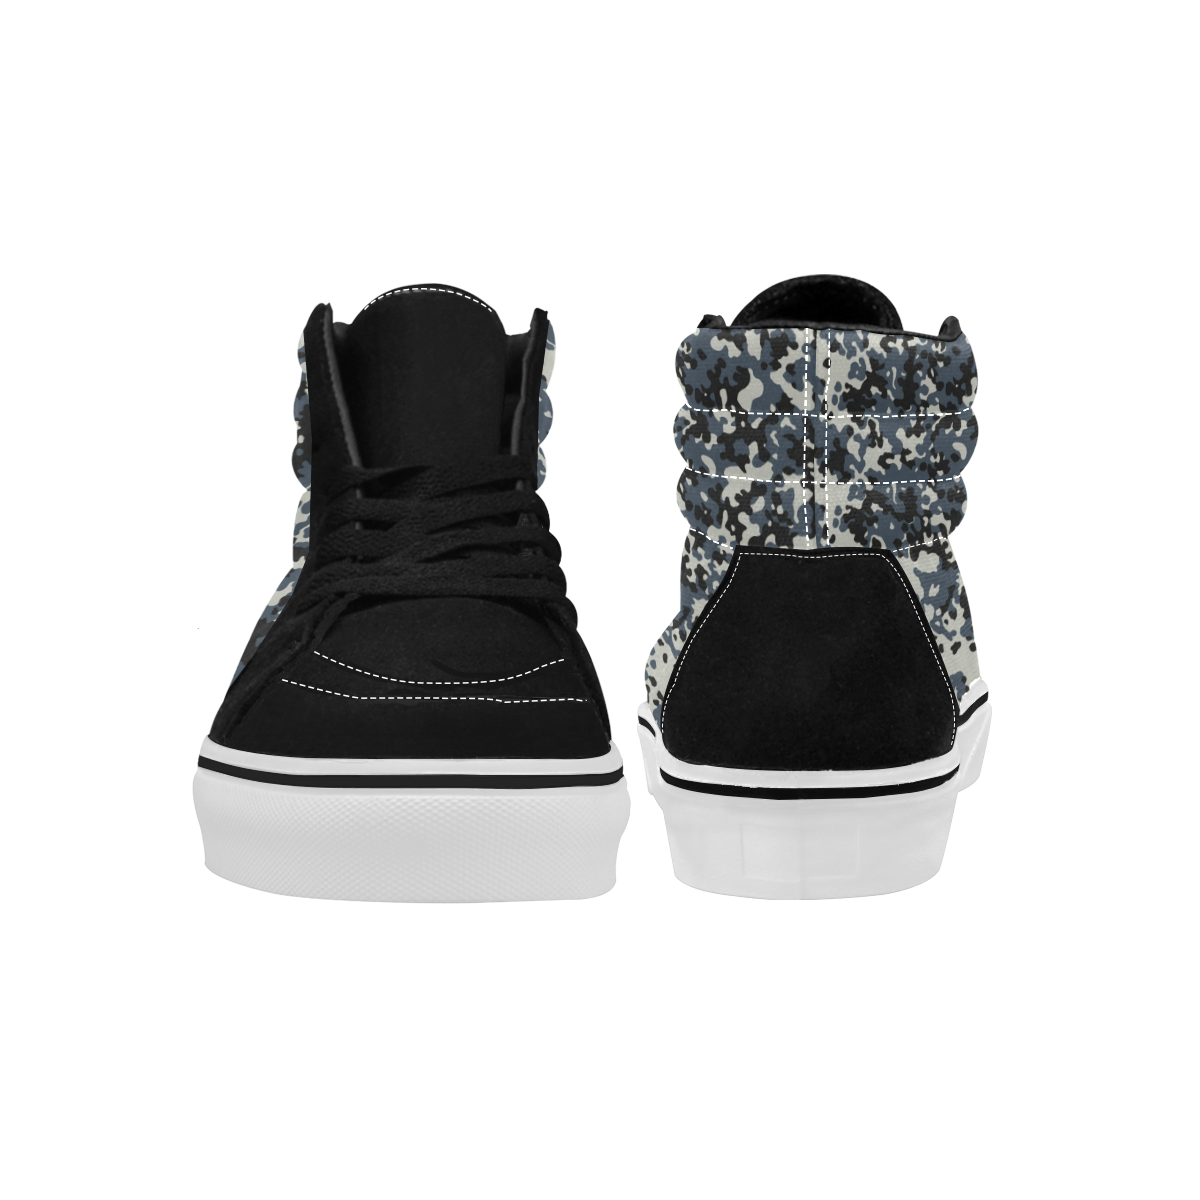 Urban City Black/Gray Digital Camouflage Women's High Top Skateboarding Shoes (Model E001-1)